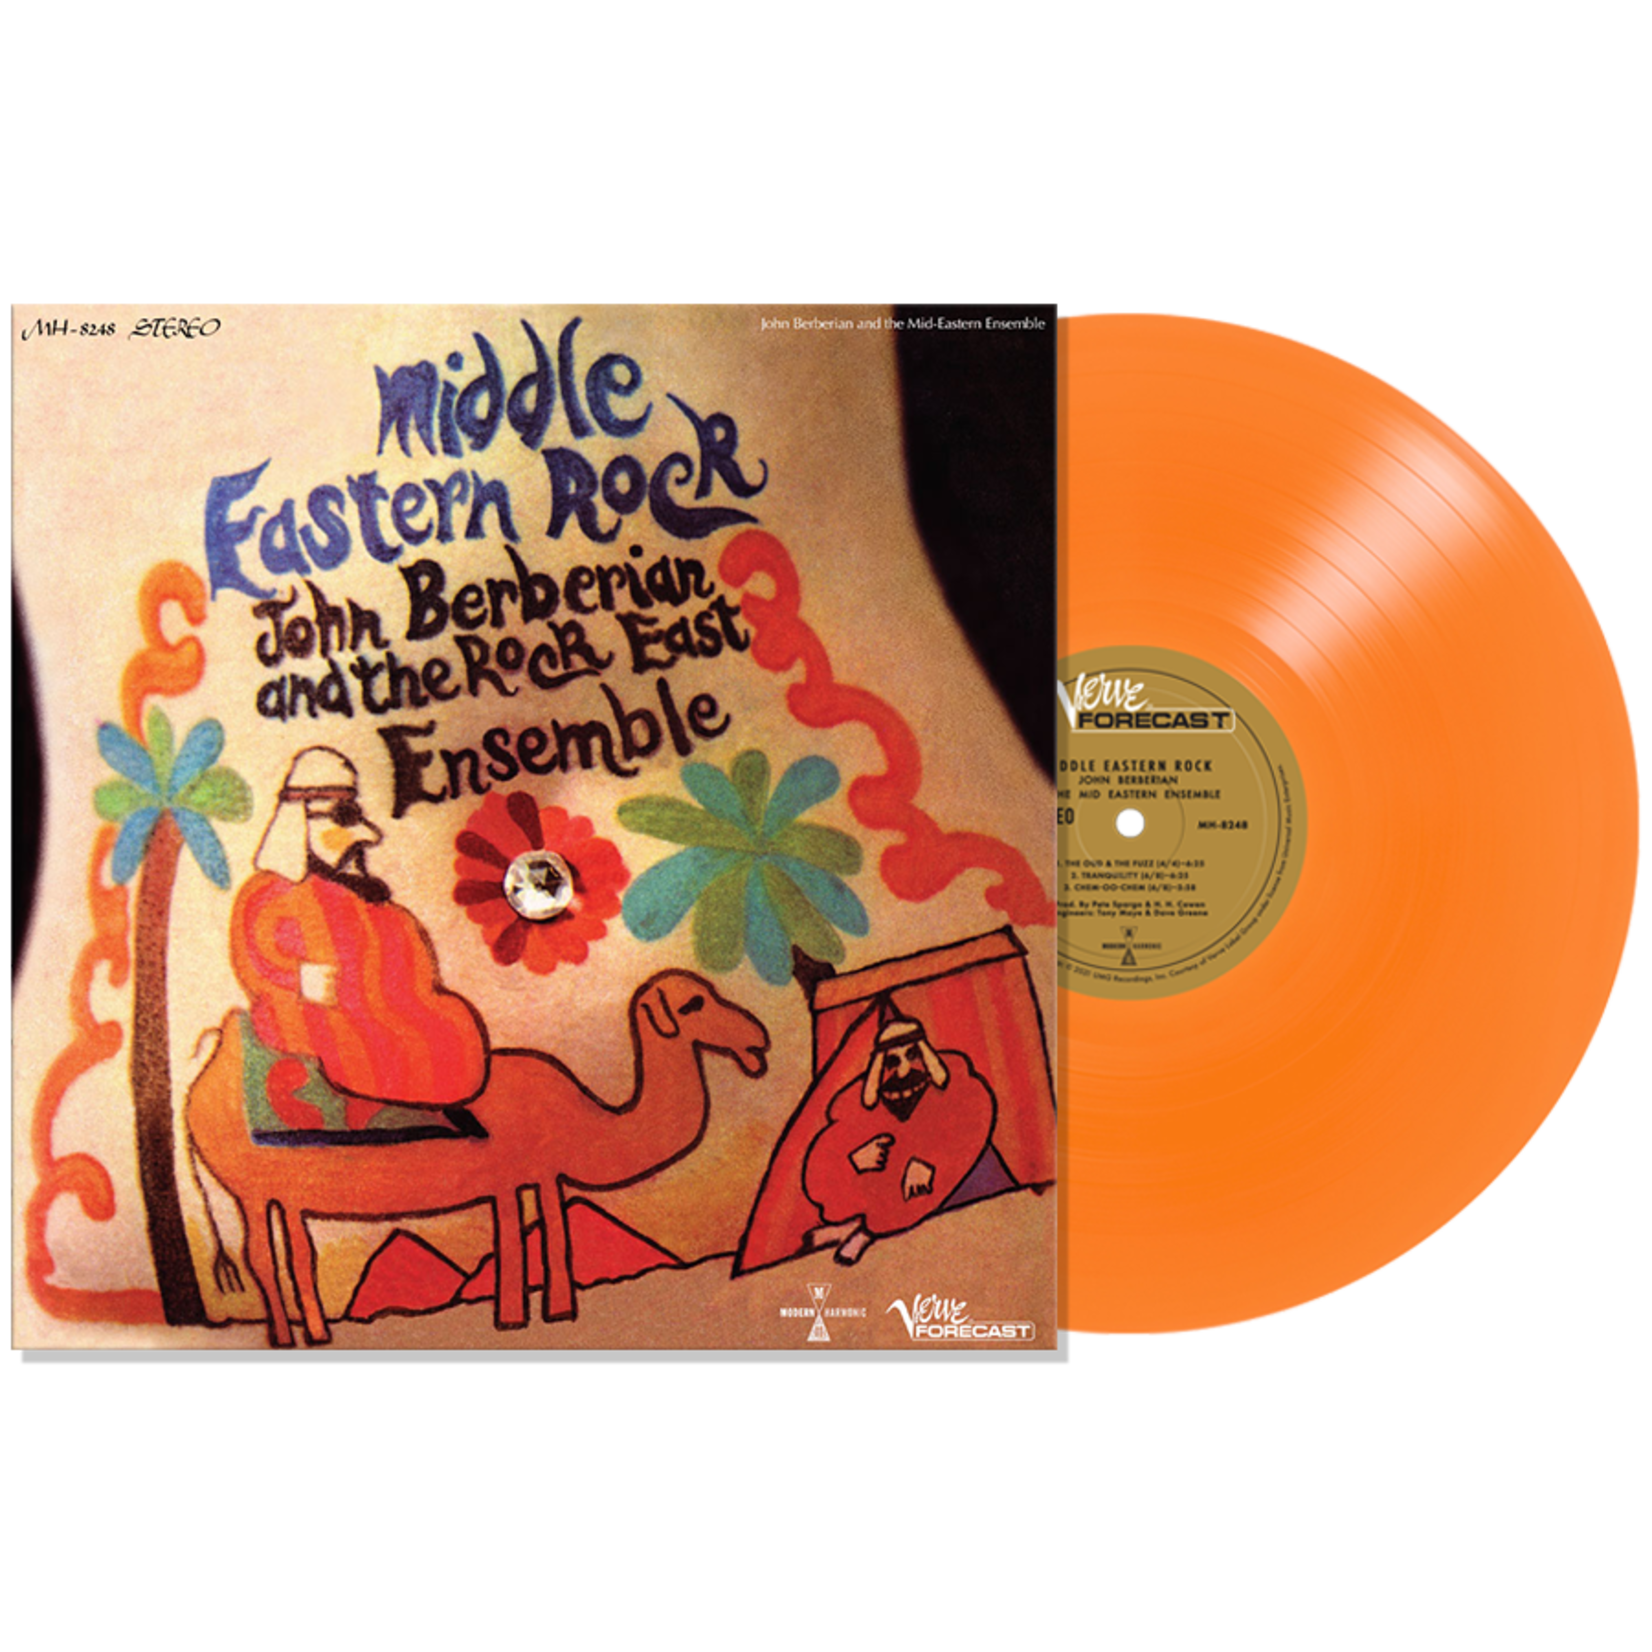 [New] John Berberian & the Rock East Ensemble - Middle Eastern Rock (orange vinyl)